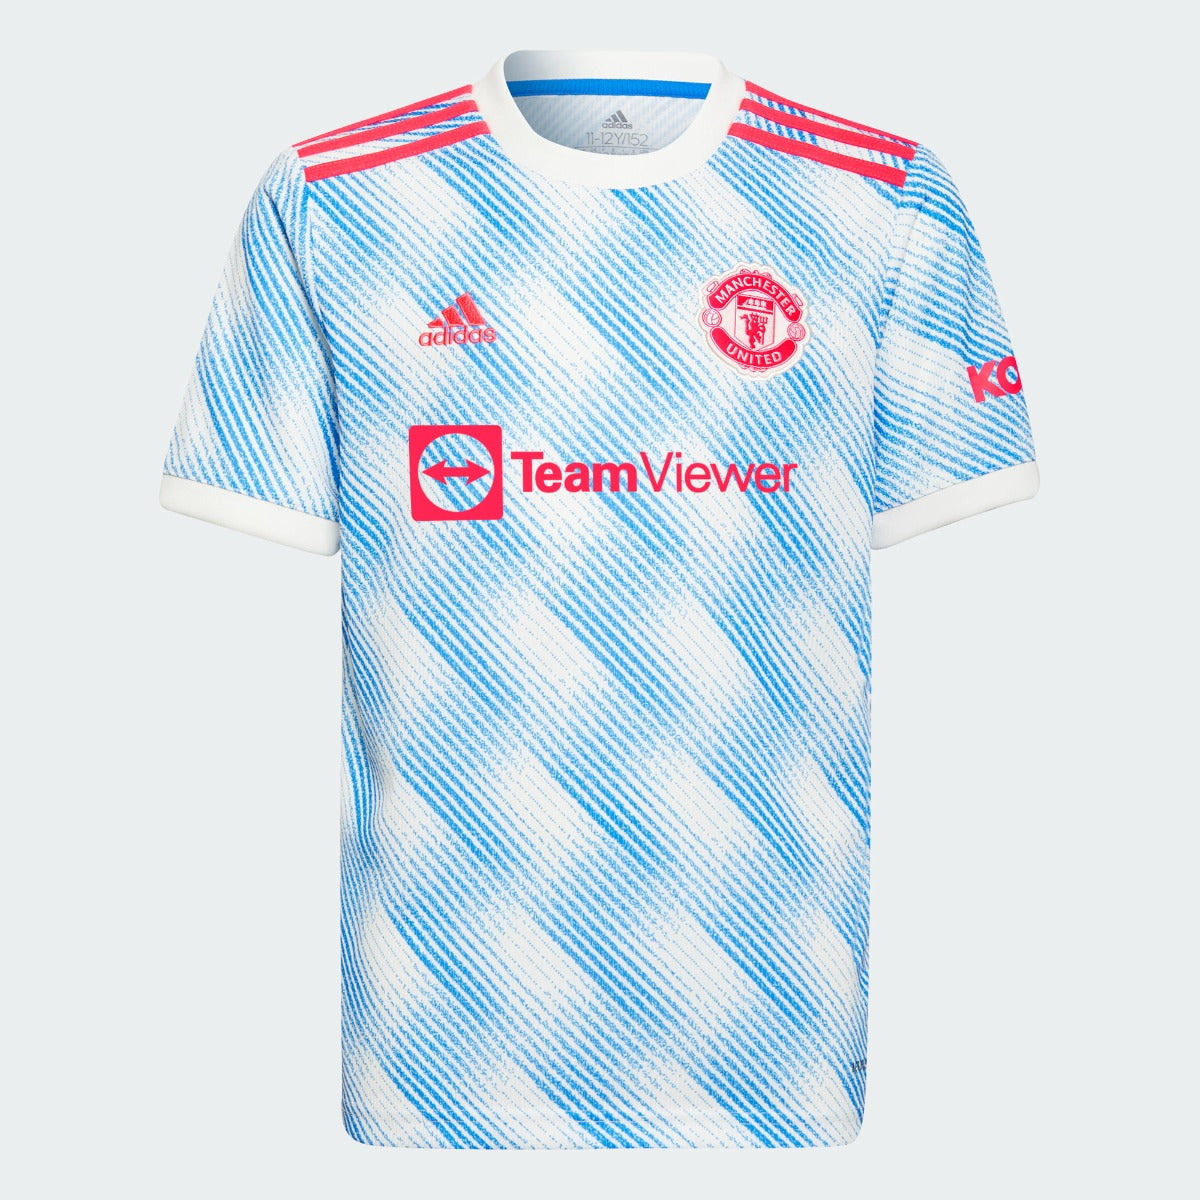 Adidas, Adidas 2021-22 Maglia da trasferta del Manchester United - Bianco-Royal